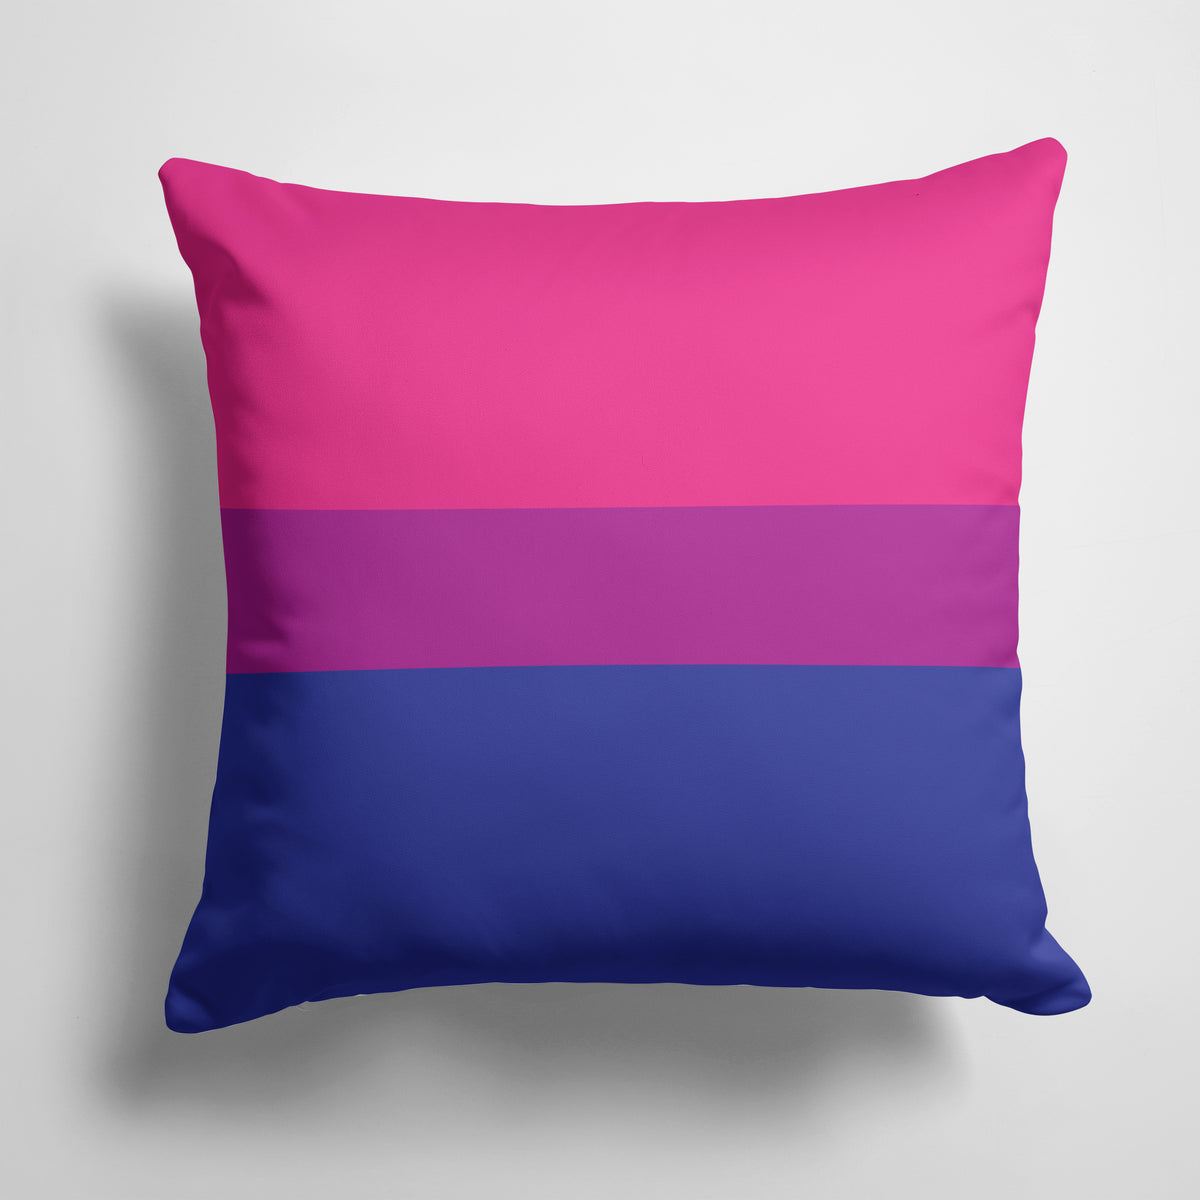 Bisexual Pride Fabric Decorative Pillow - the-store.com